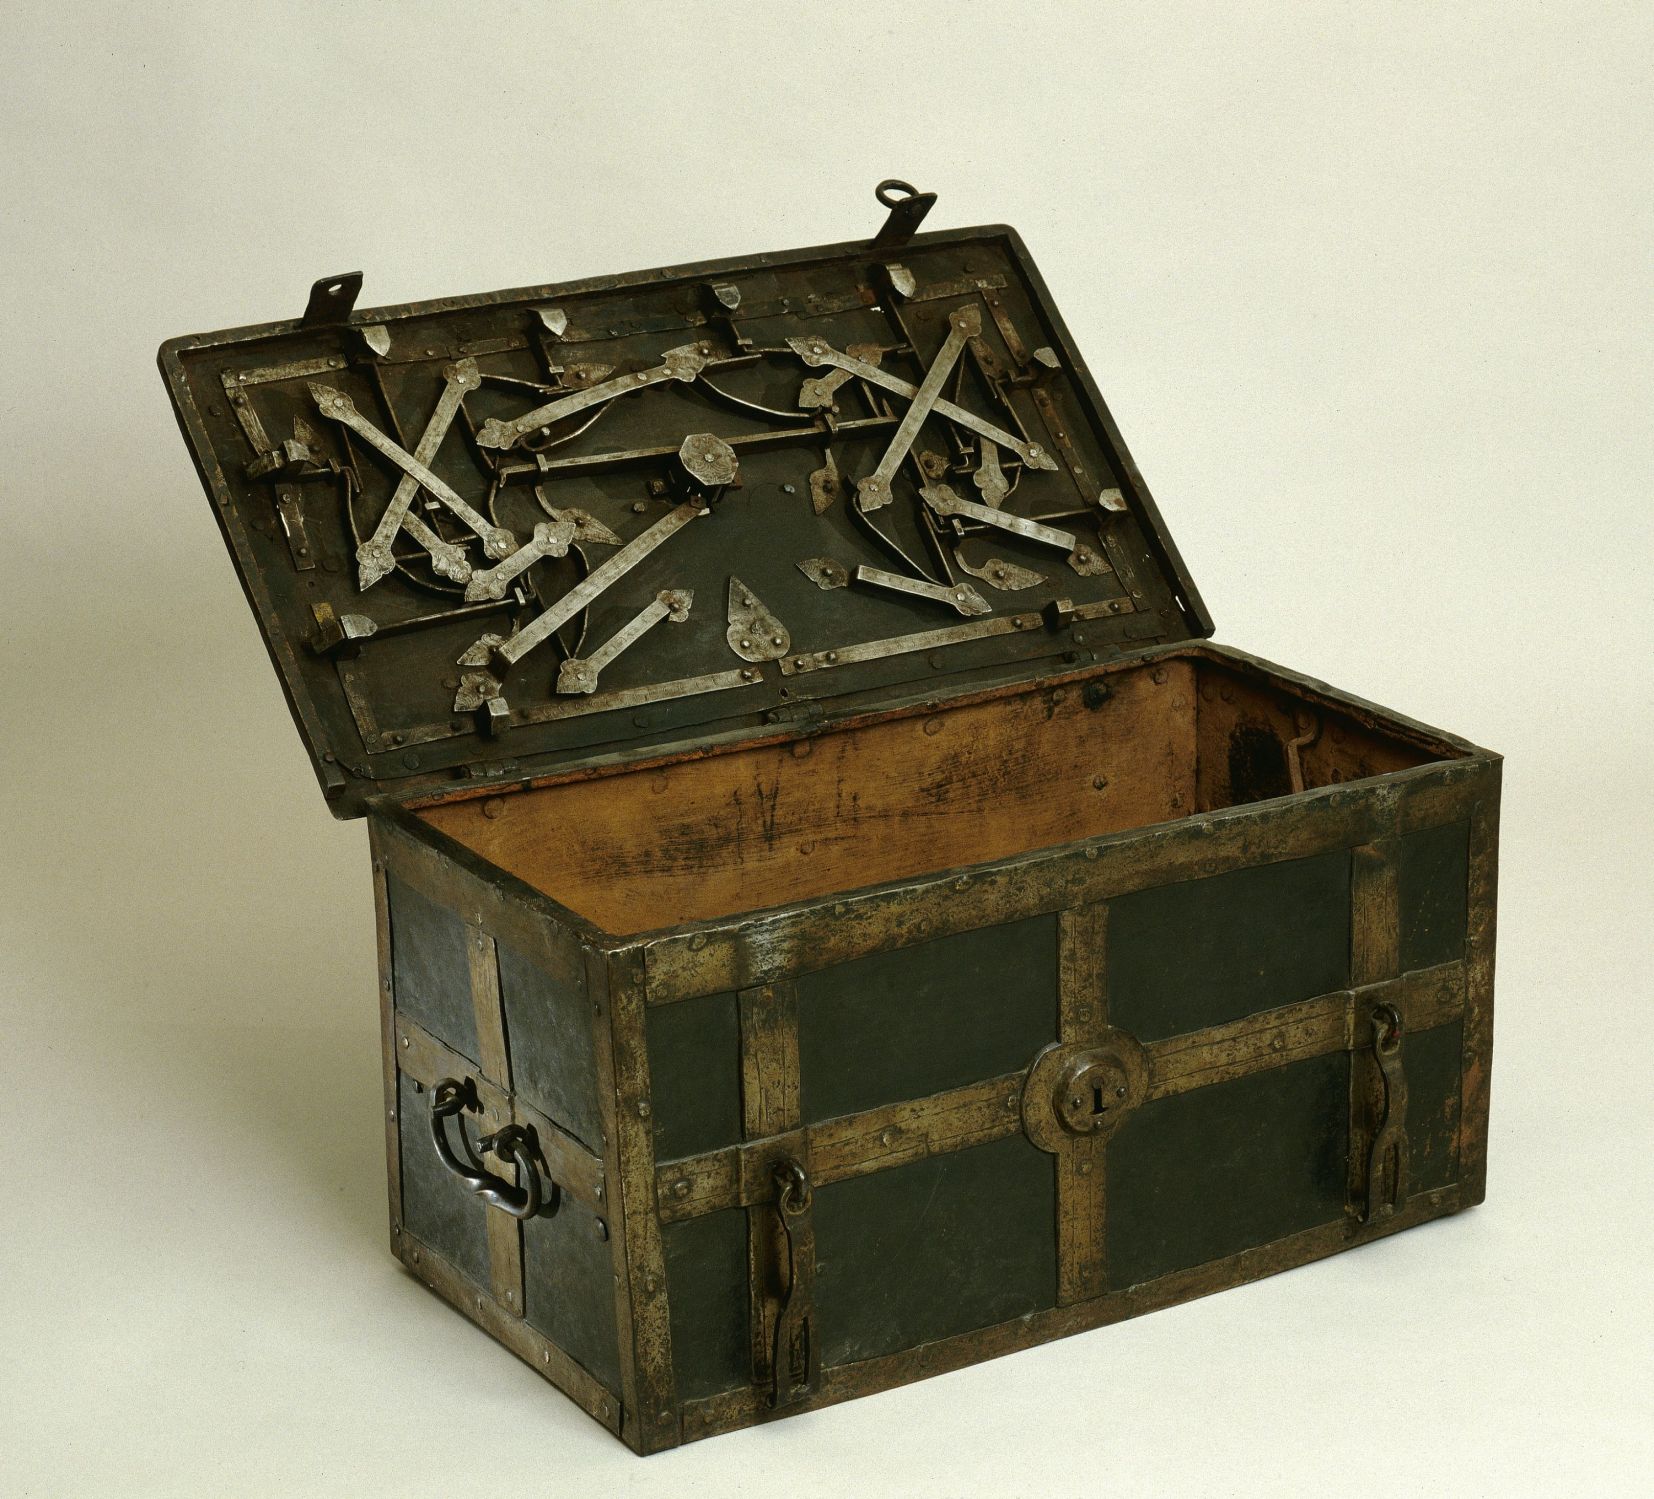 17th or 18th century navy chest © Musée national de la Marine